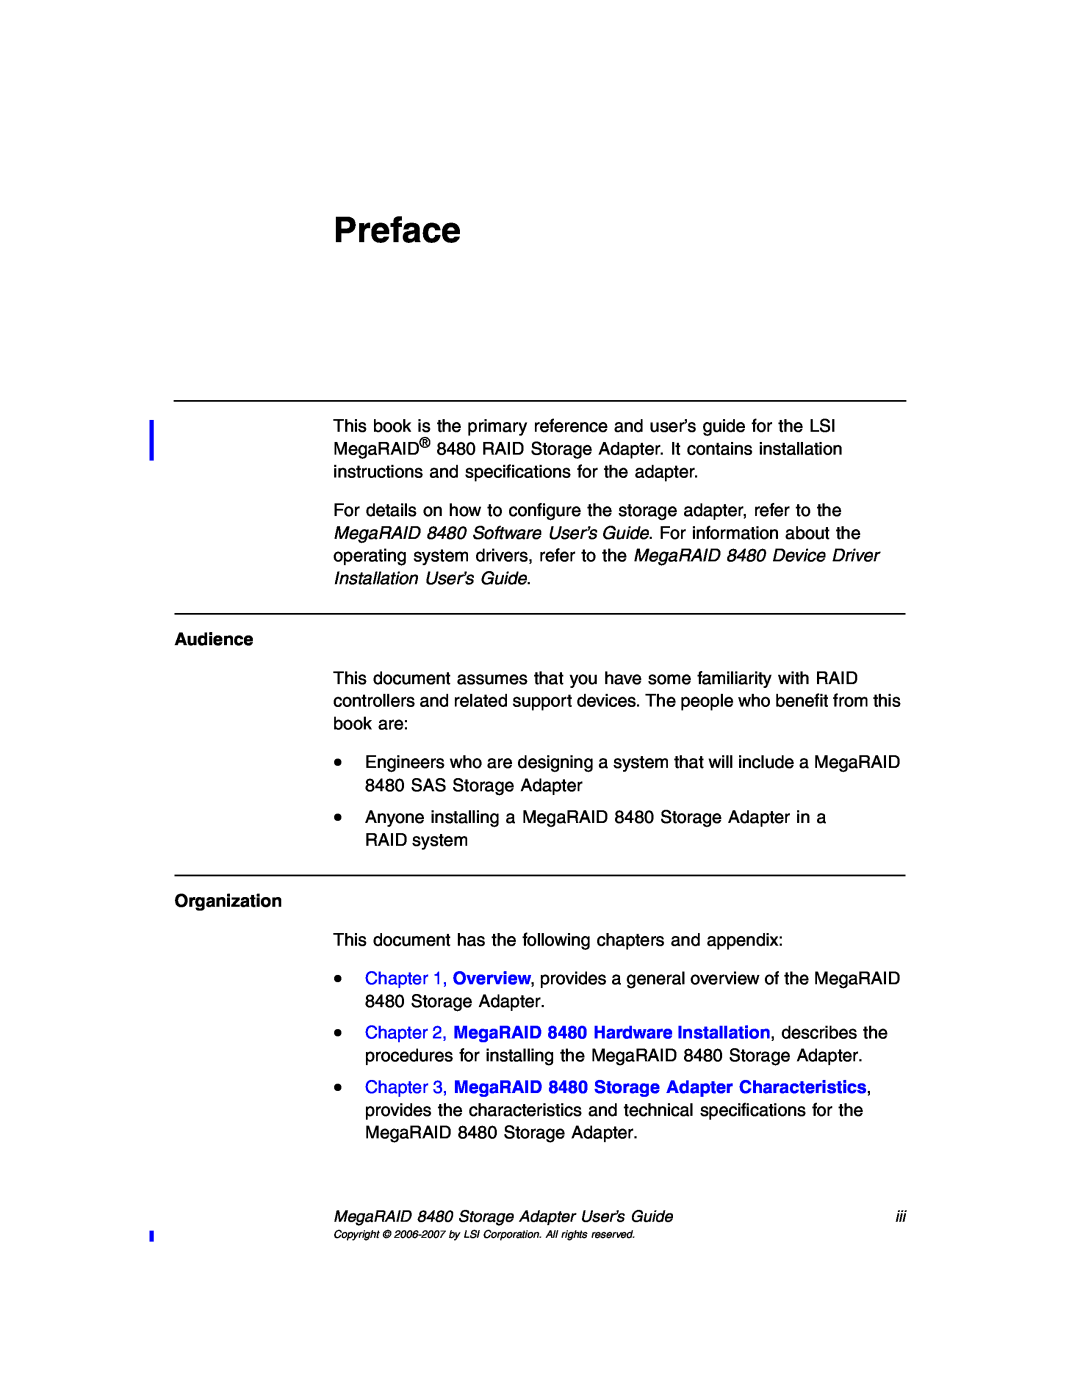 IBM MegaRAID 8480 manual Preface, Audience, Organization 